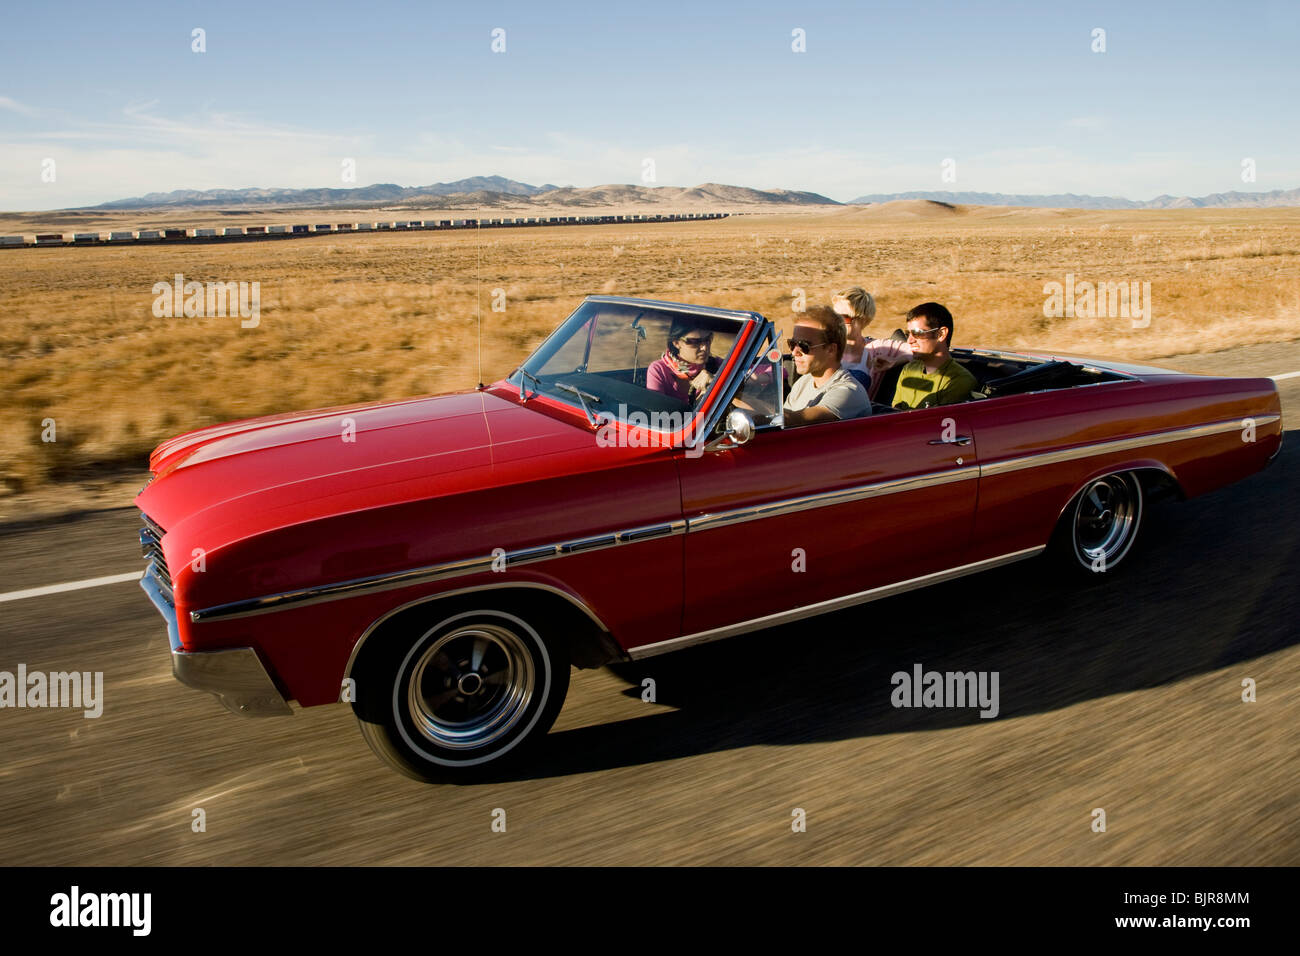 Car spoiler -Fotos und -Bildmaterial in hoher Auflösung – Alamy